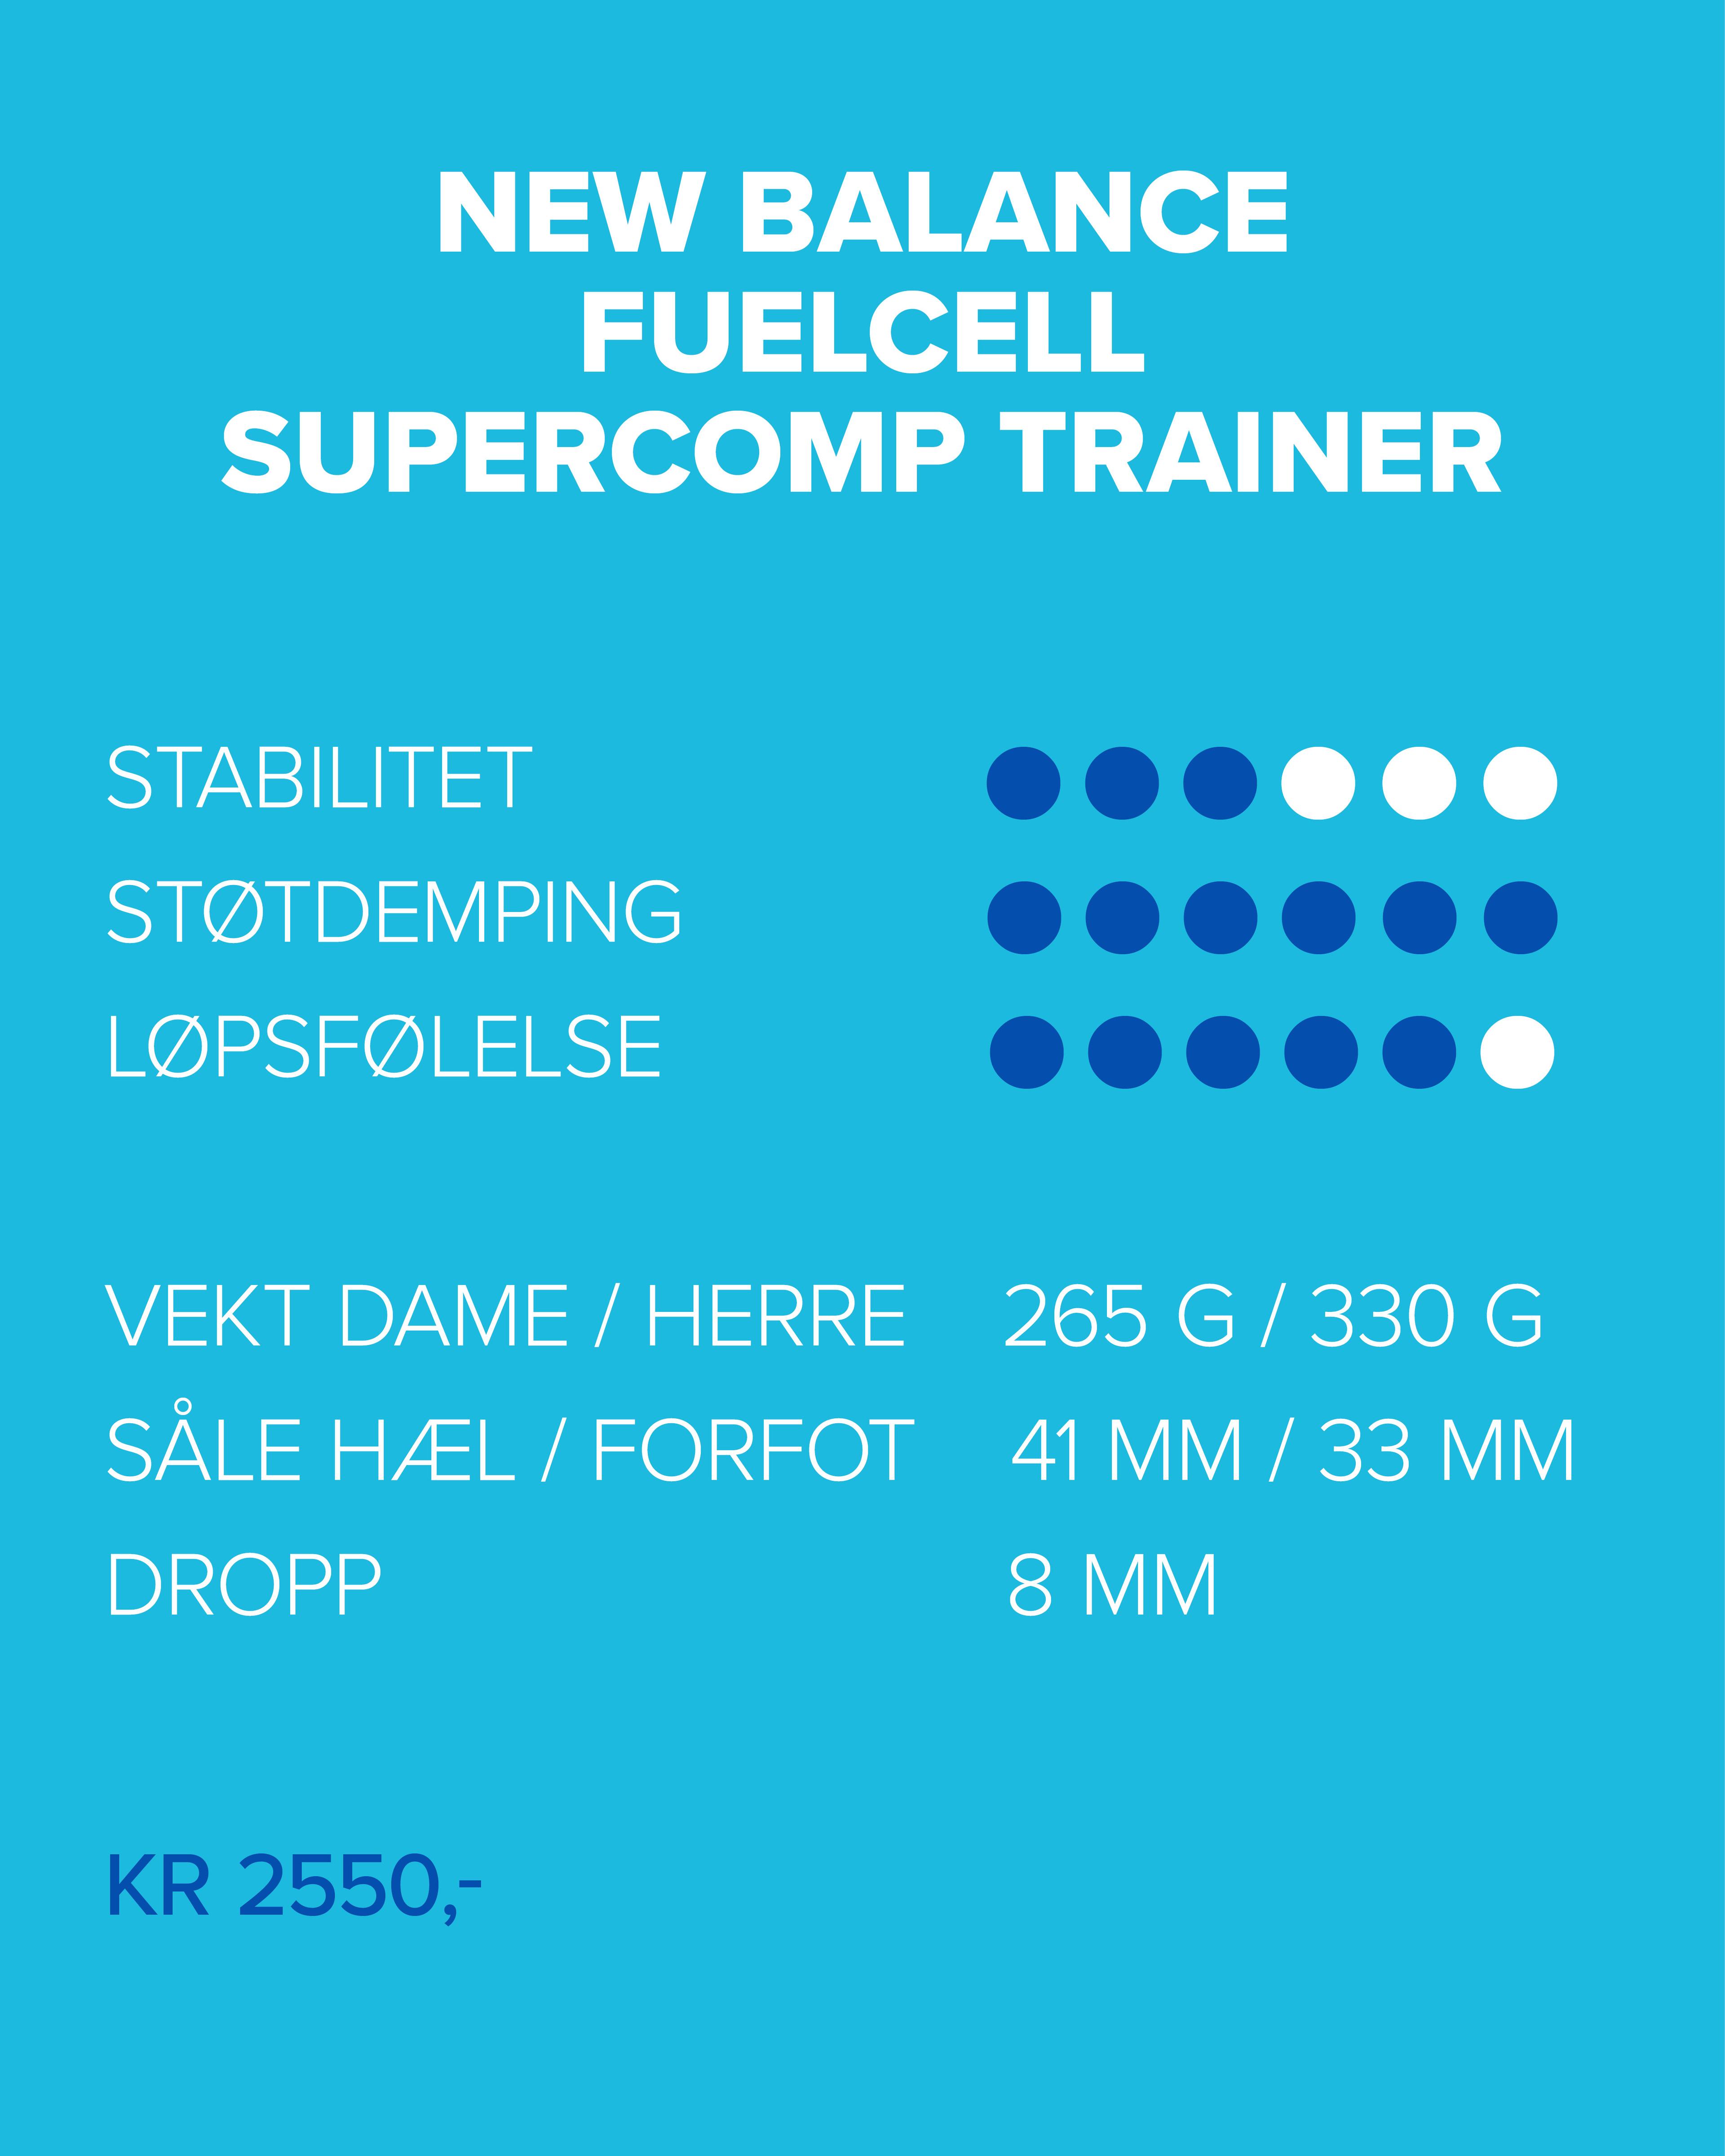 Supercomp trainer